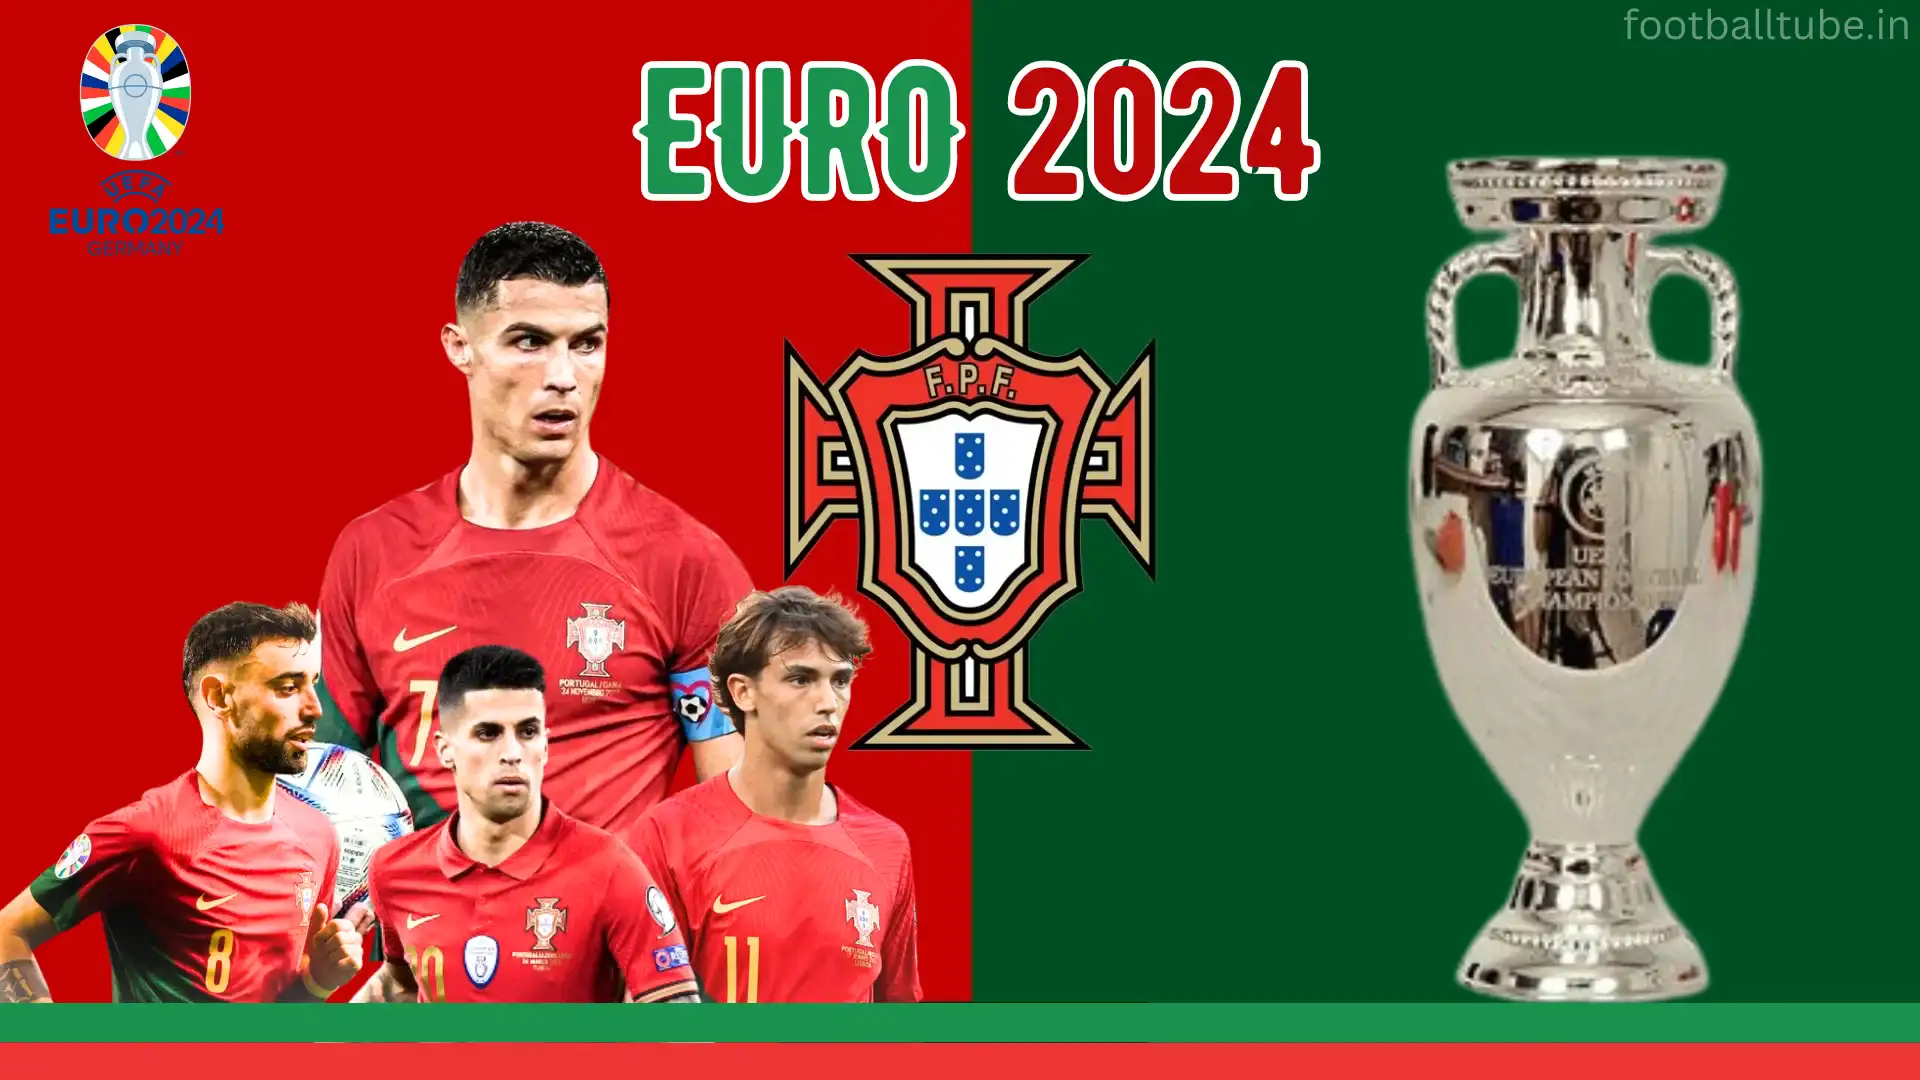 portugal euro 2024 wallpaper